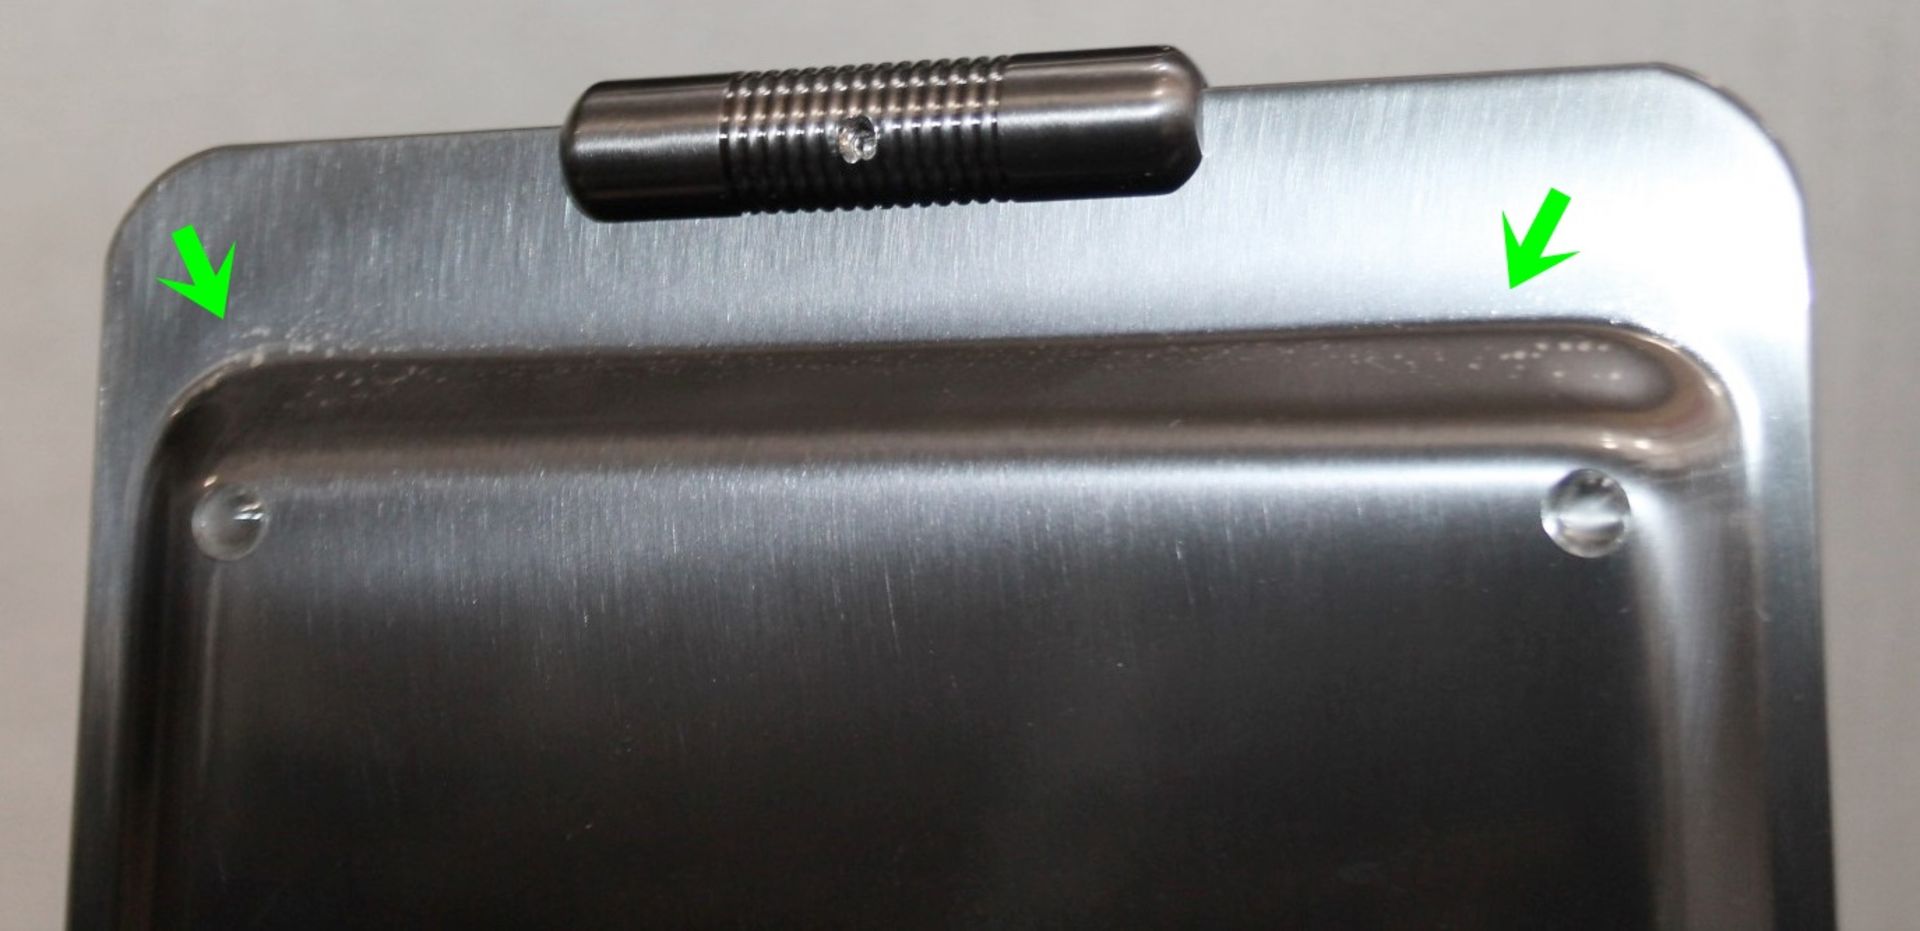 1 x ZODIAC Designer Tray With A Dark Nickel Finish - Original Price £439.00 - Ref: 5332914/HAS1171/ - Image 6 of 6